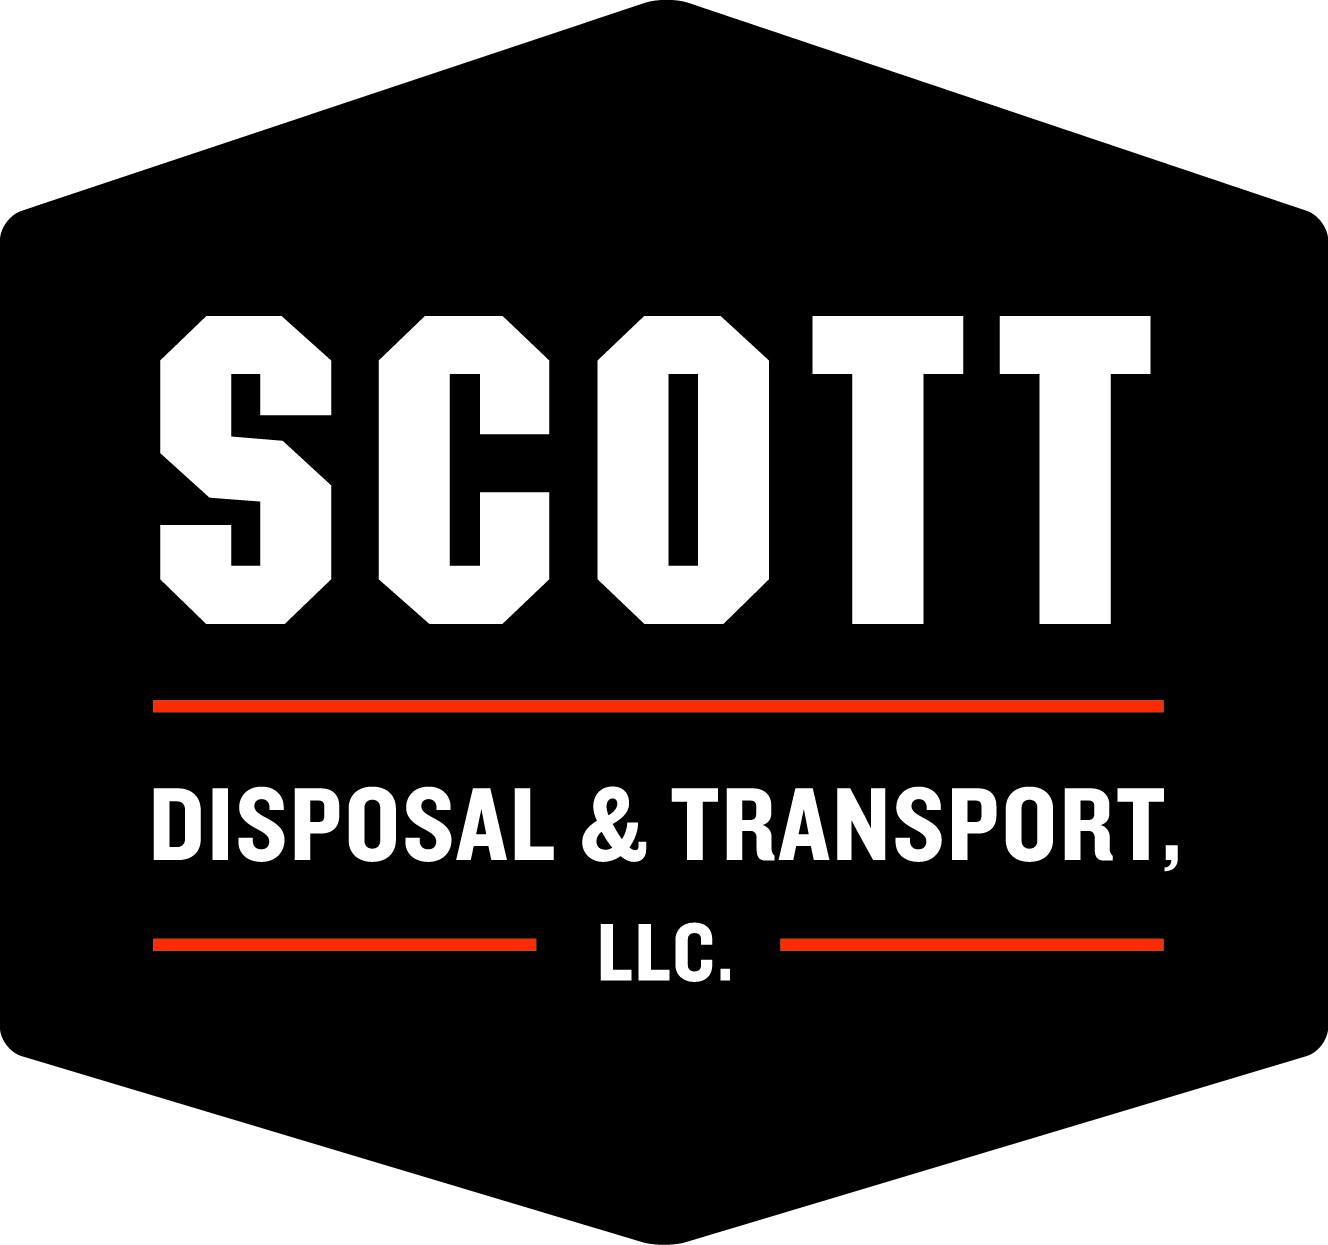 Scott Disposal & Transport, LLC Logo